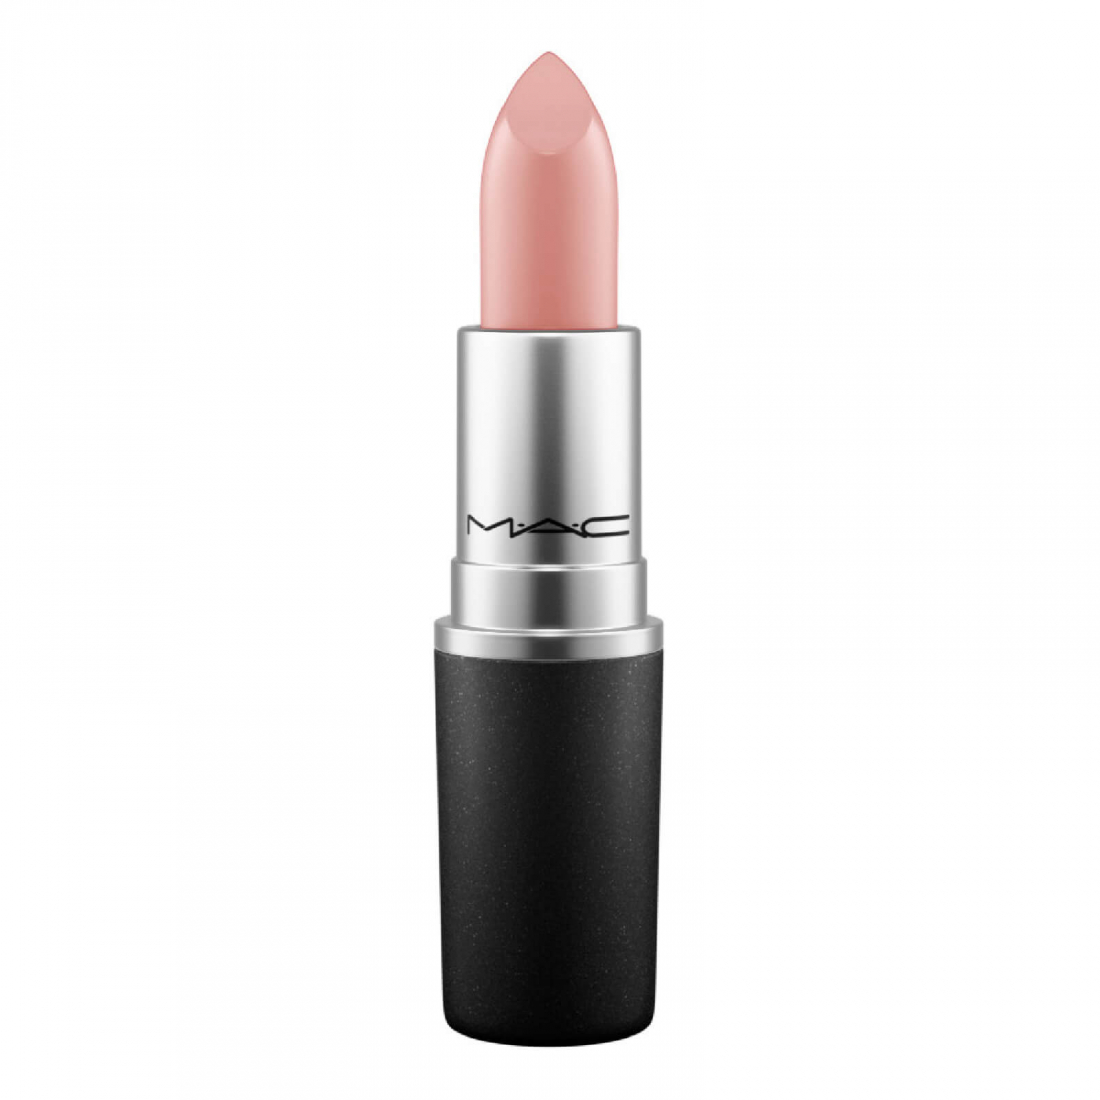 'Amplified Crème' Lipstick - Blankety 3 g